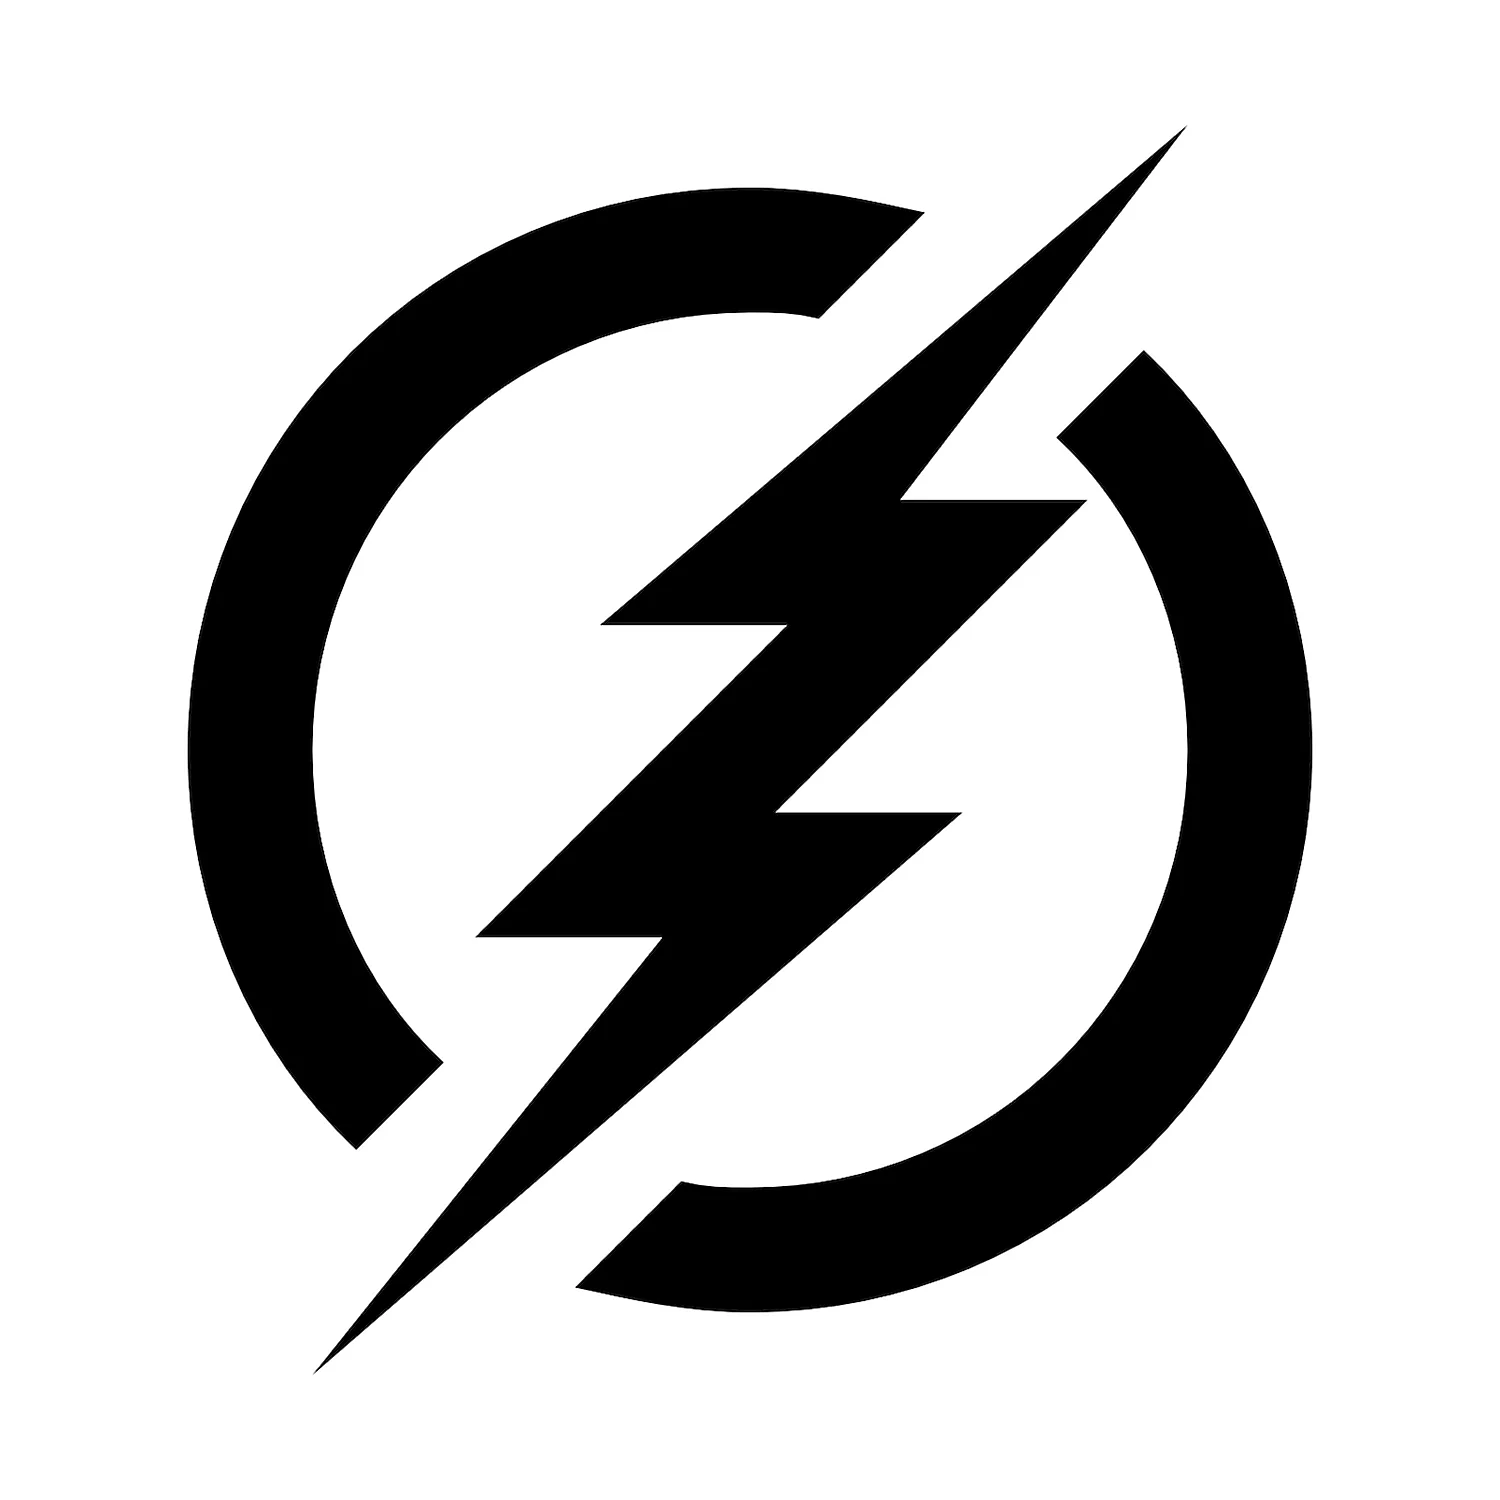 Молния логотип